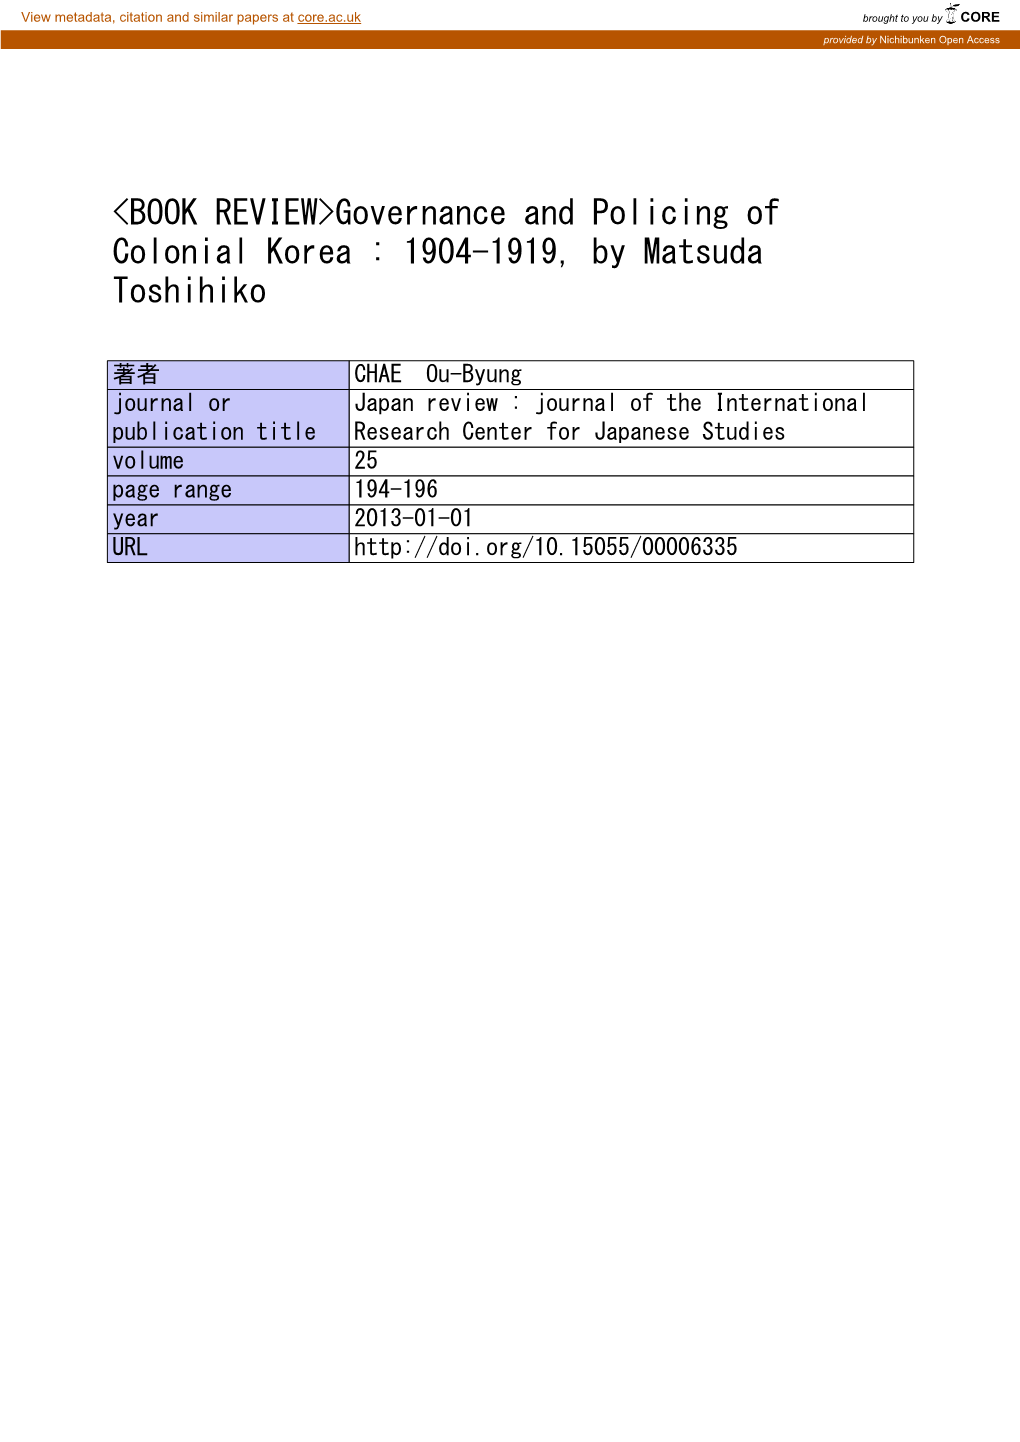 Governance and Policing of Colonial Korea : 1904-1919, by Matsuda Toshihiko